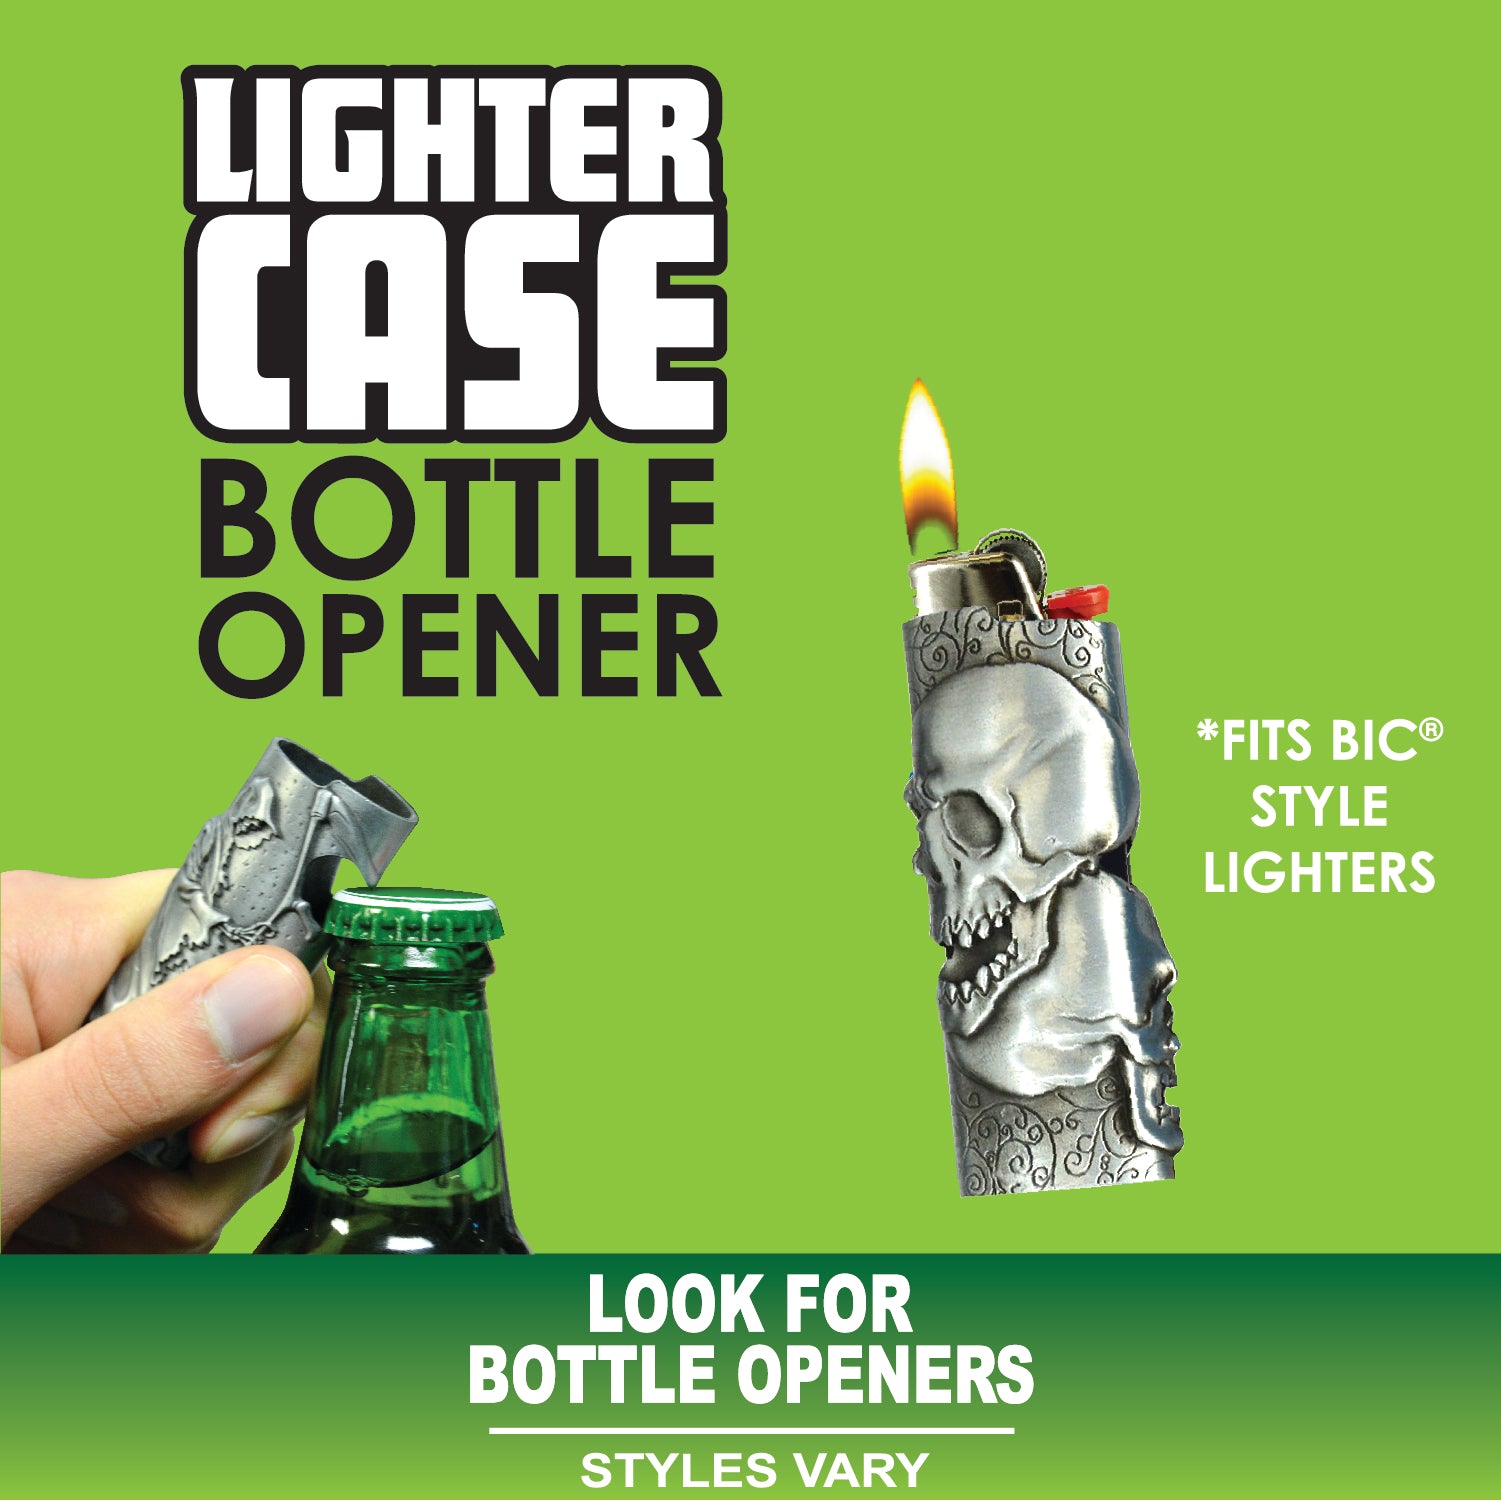 Mystic Lighter Case